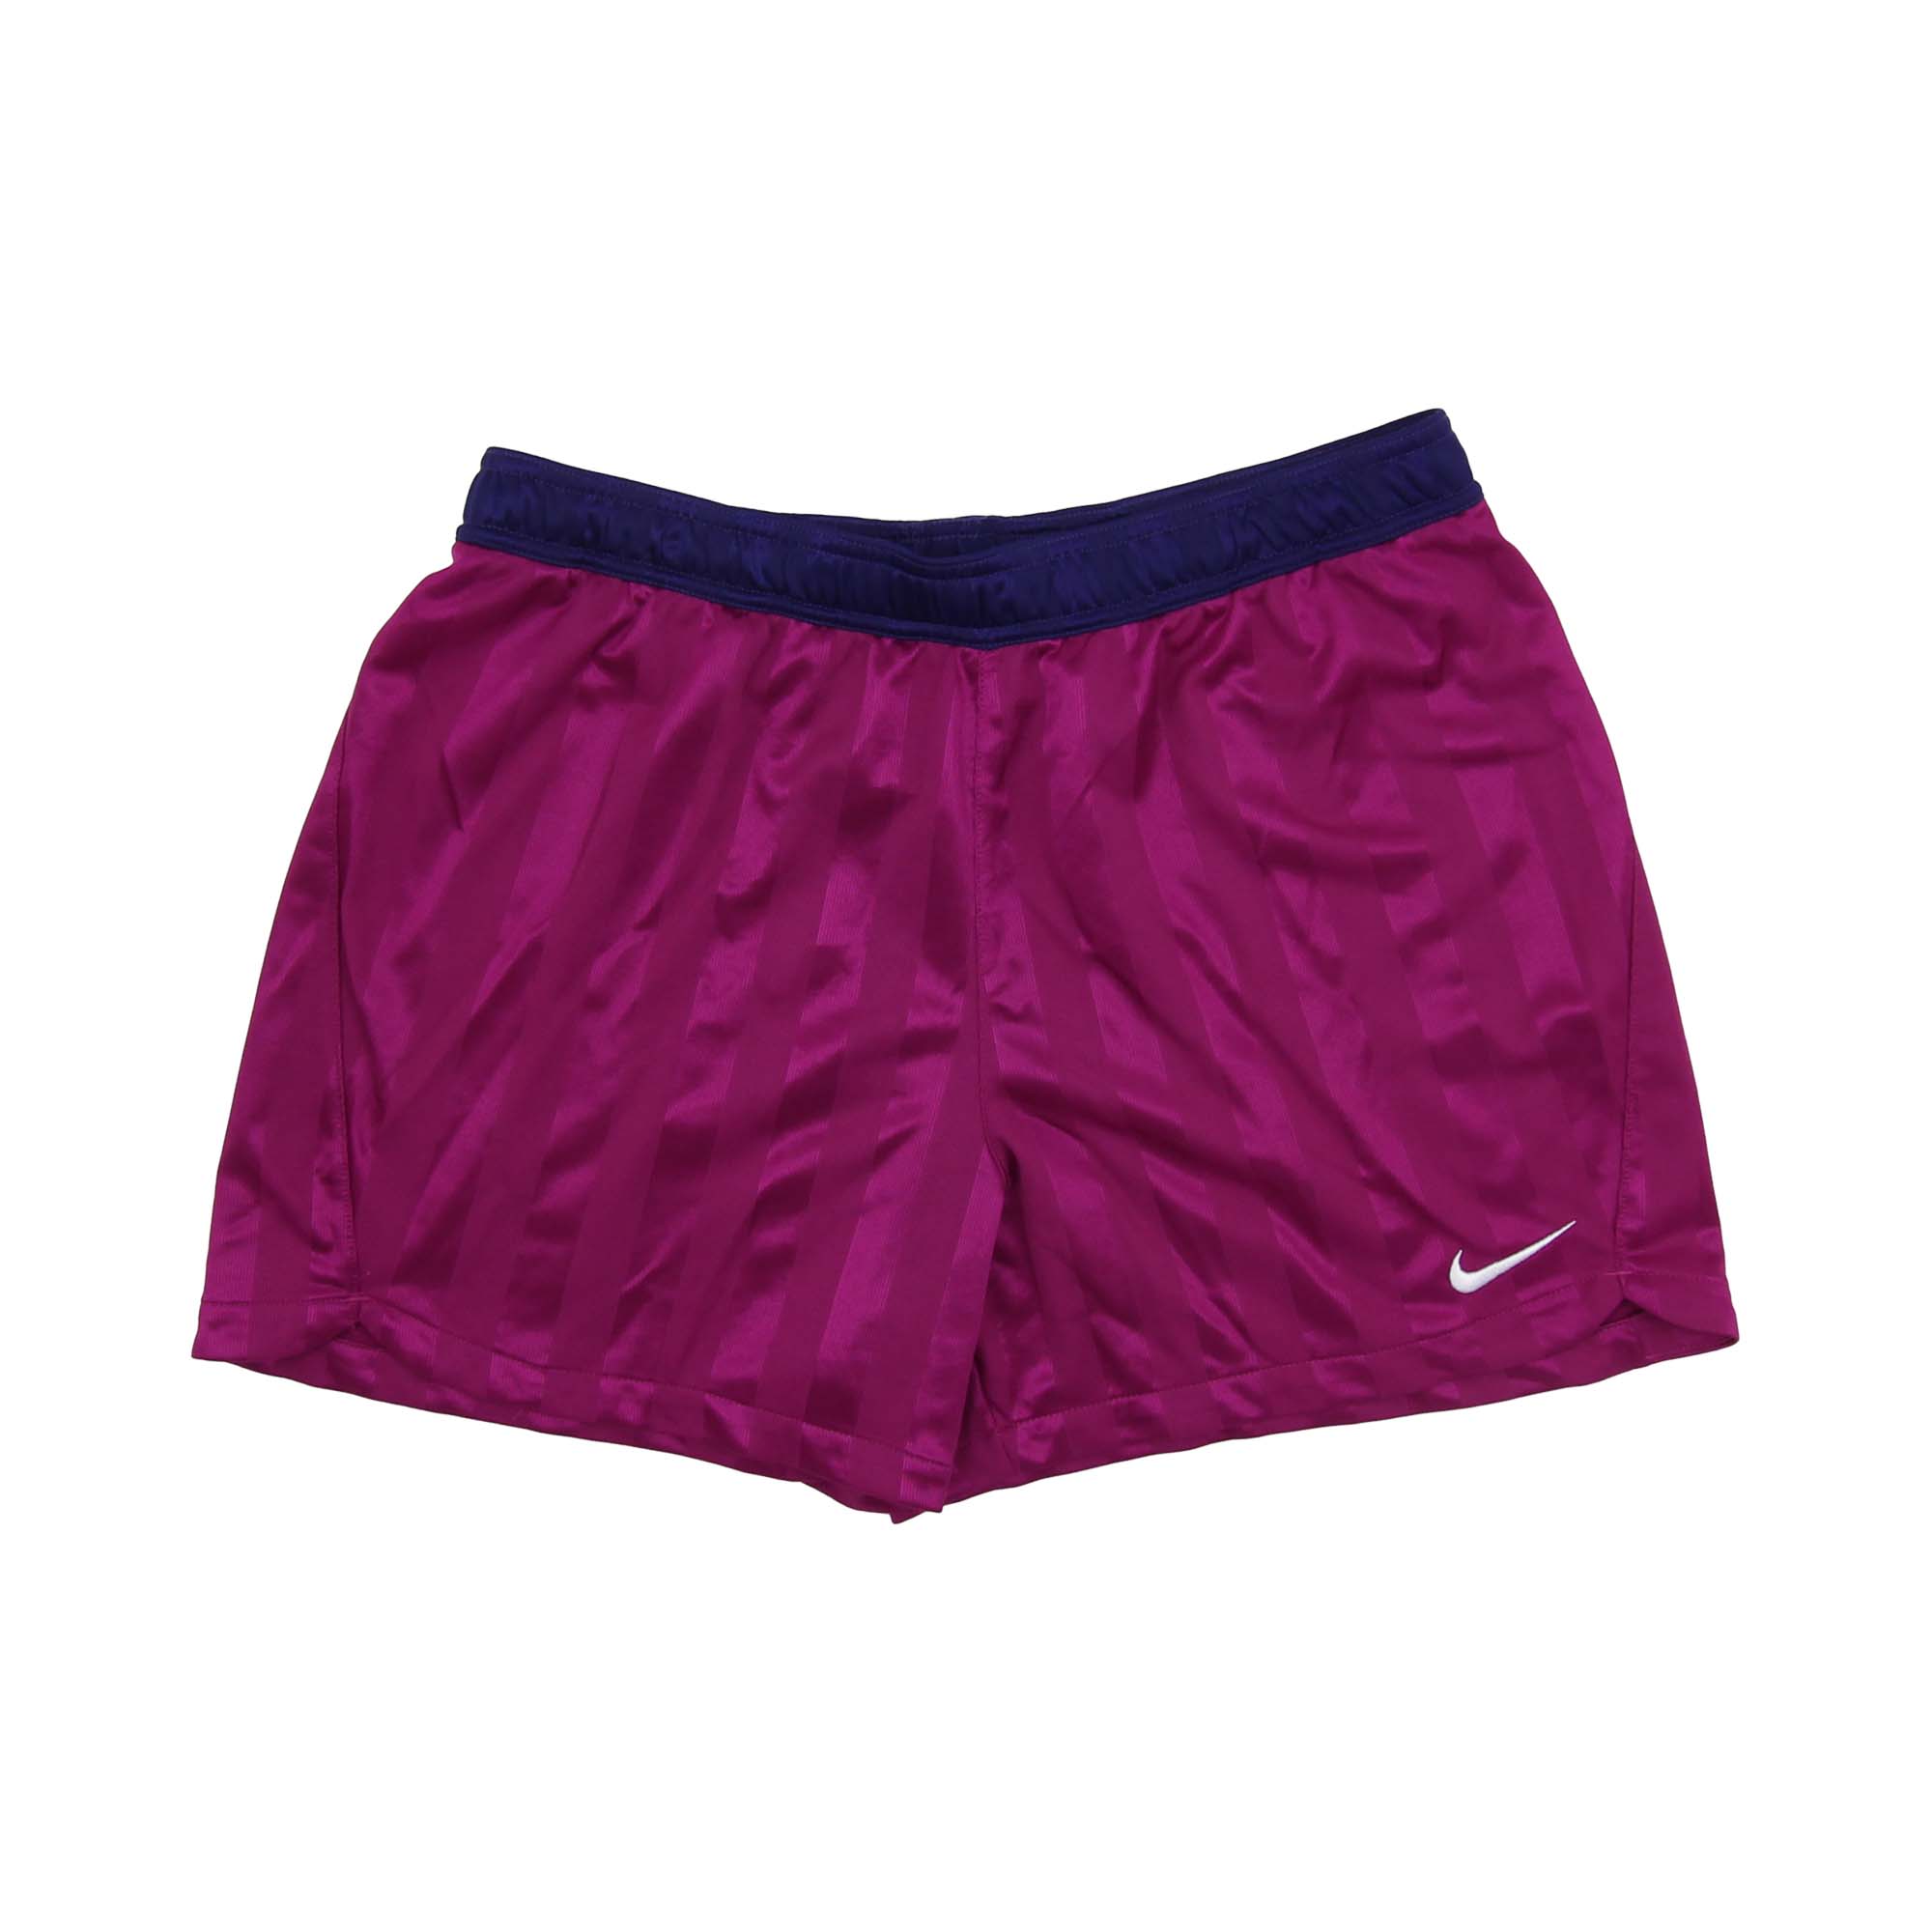 Nike Embroidered Logo Shorts - M